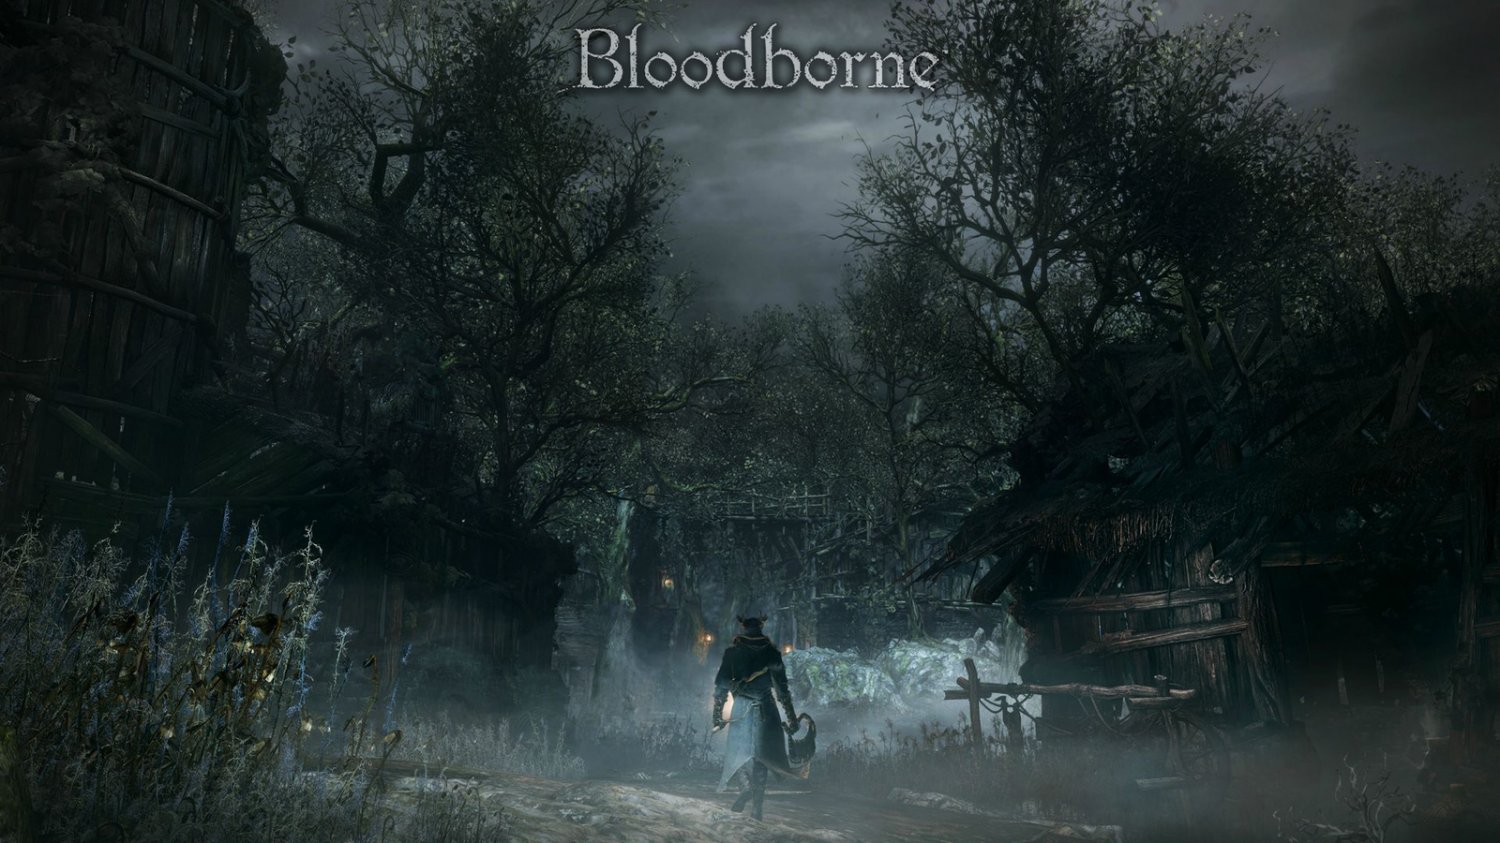 Bloodborne Game 13"x19" (32cm/49cm) Poster